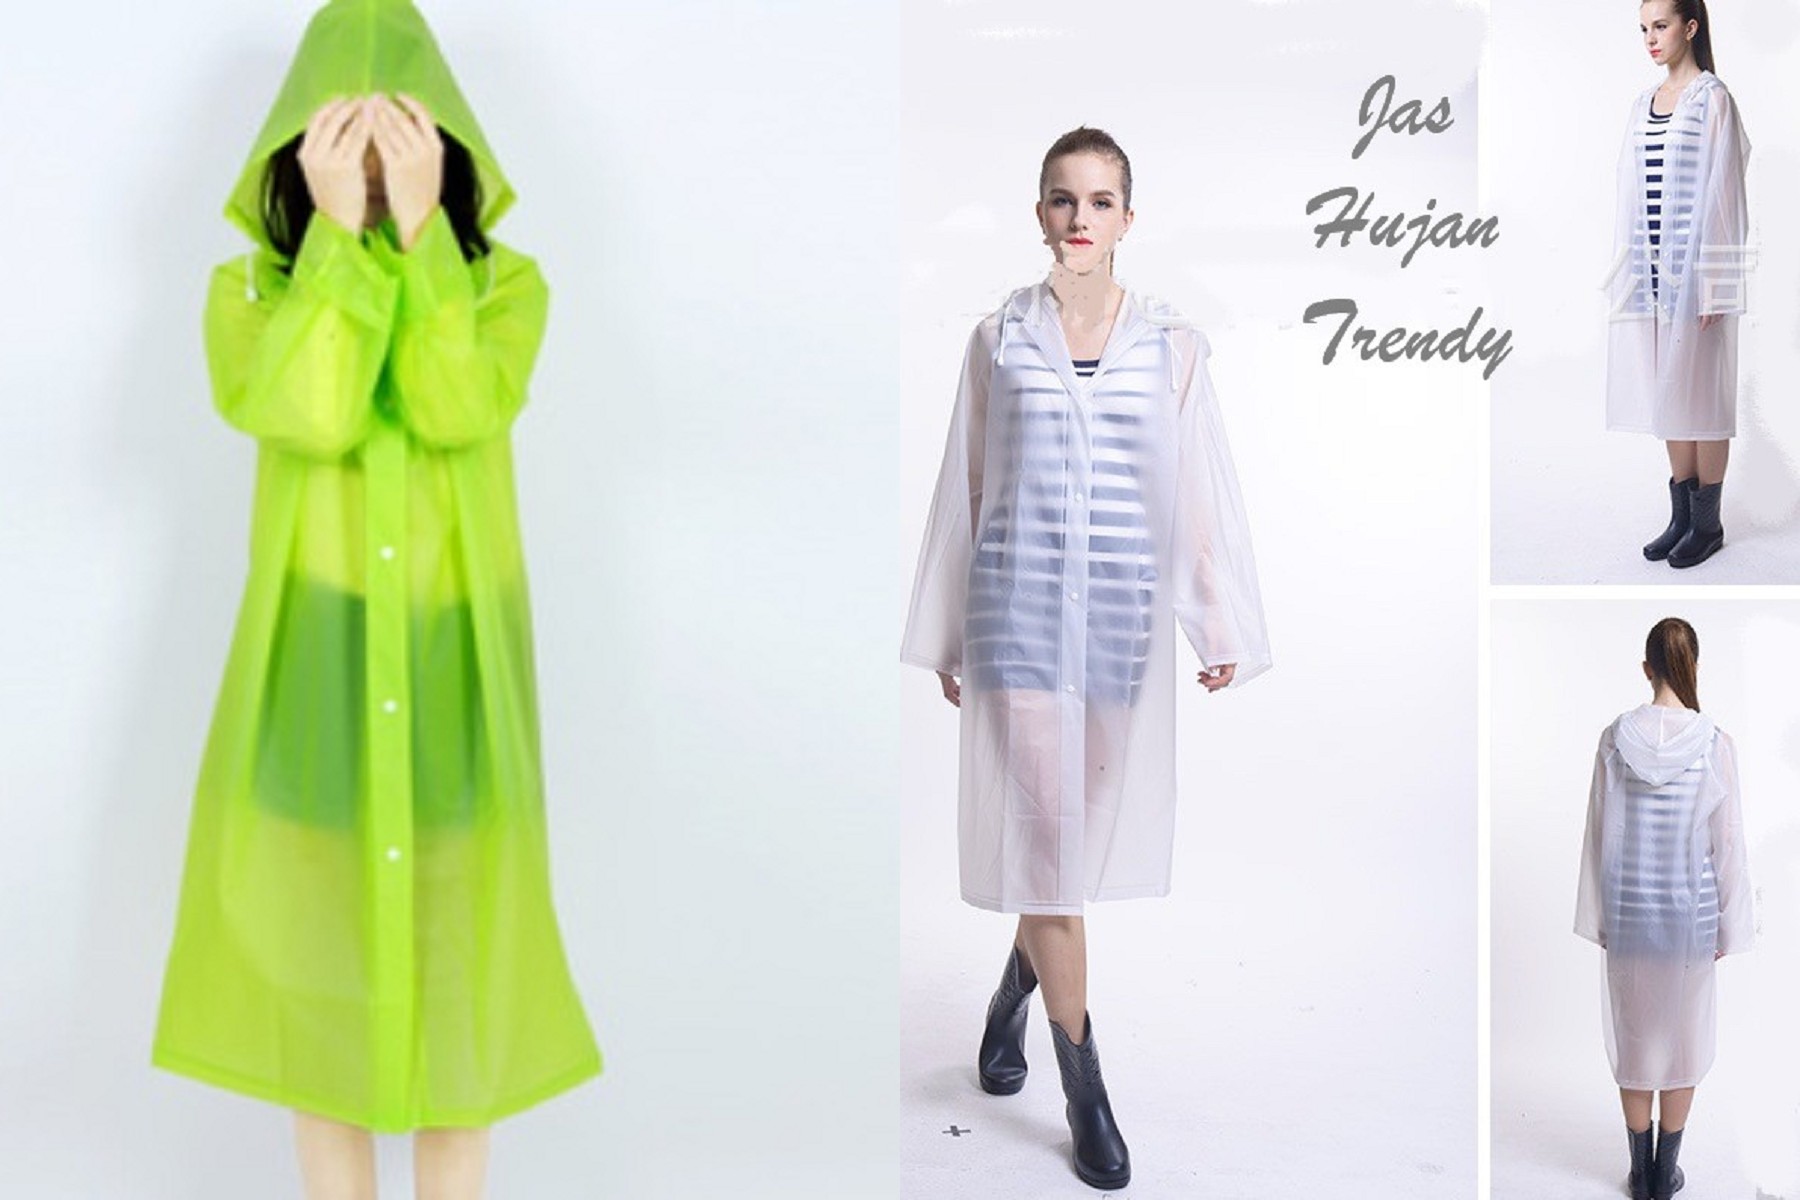  jas hujan wanita fashionable